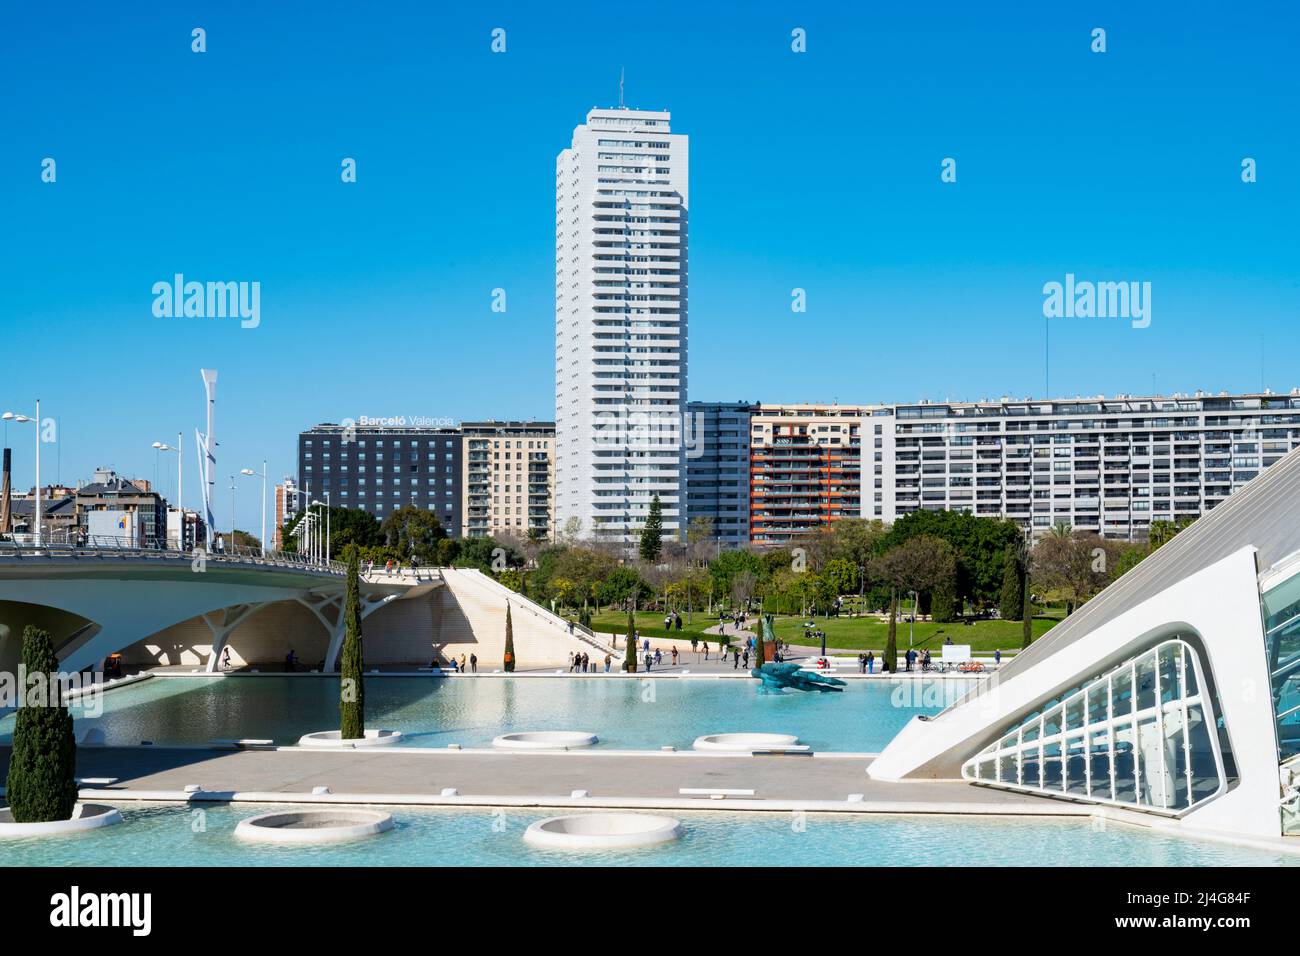 Spanien, Valencia, Ciudad de las Artes y las Ciencias (Stadt der Künste und Wissenschaften), Hochaus Torre de França und L'Hemisfèric Stock Photo